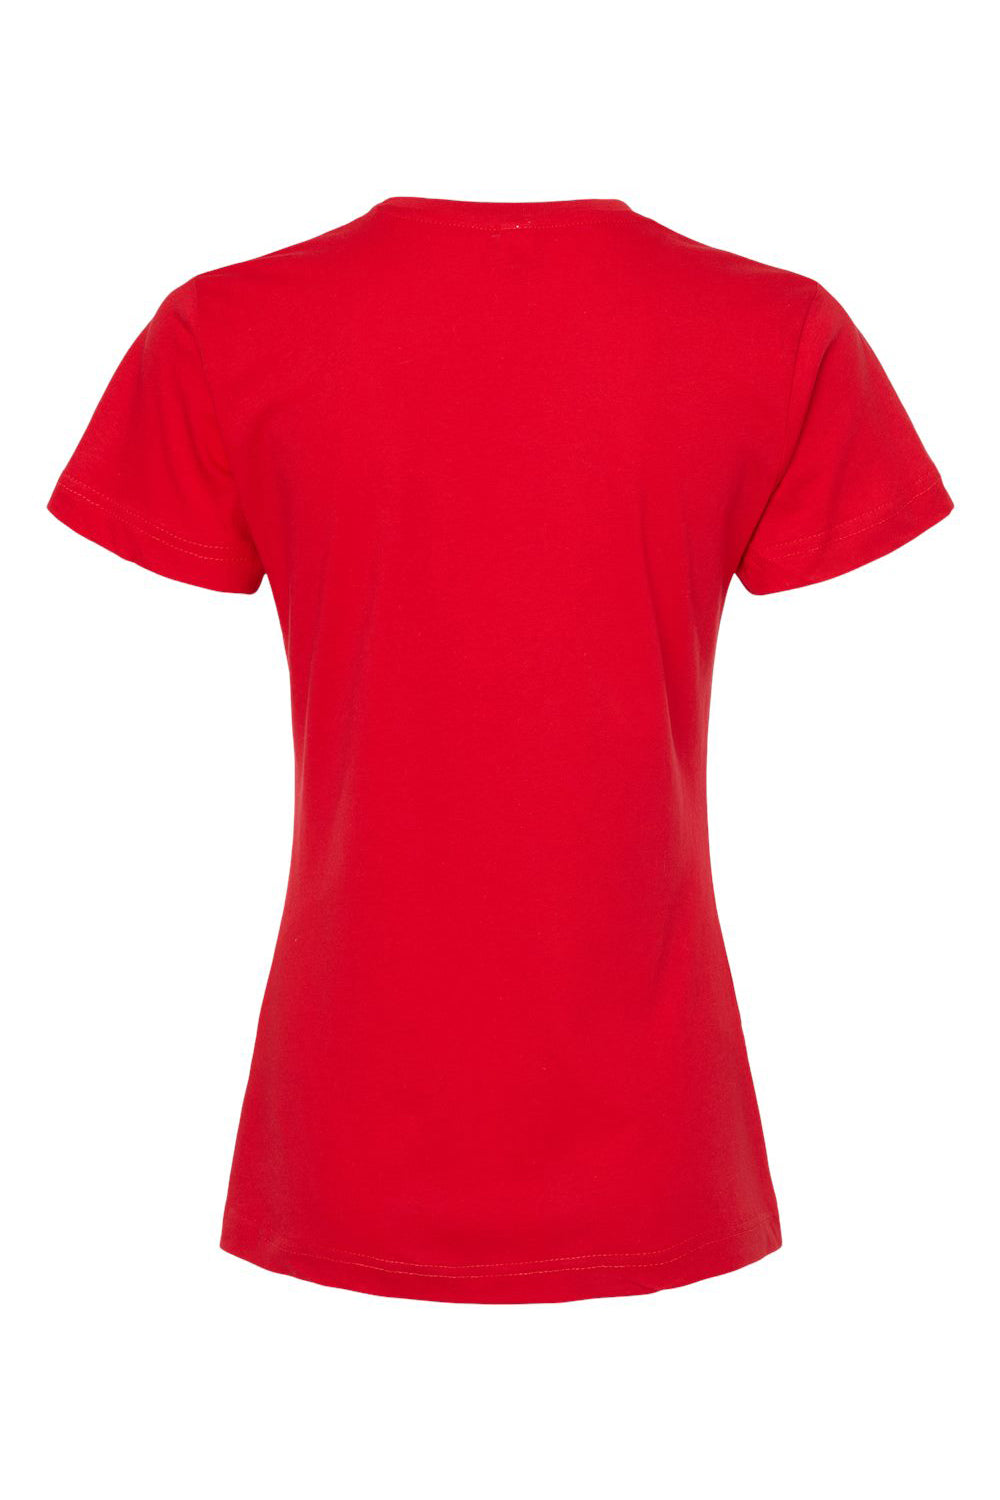 Tultex 216 Womens Fine Jersey Classic Fit Short Sleeve Crewneck T-Shirt Red Flat Back